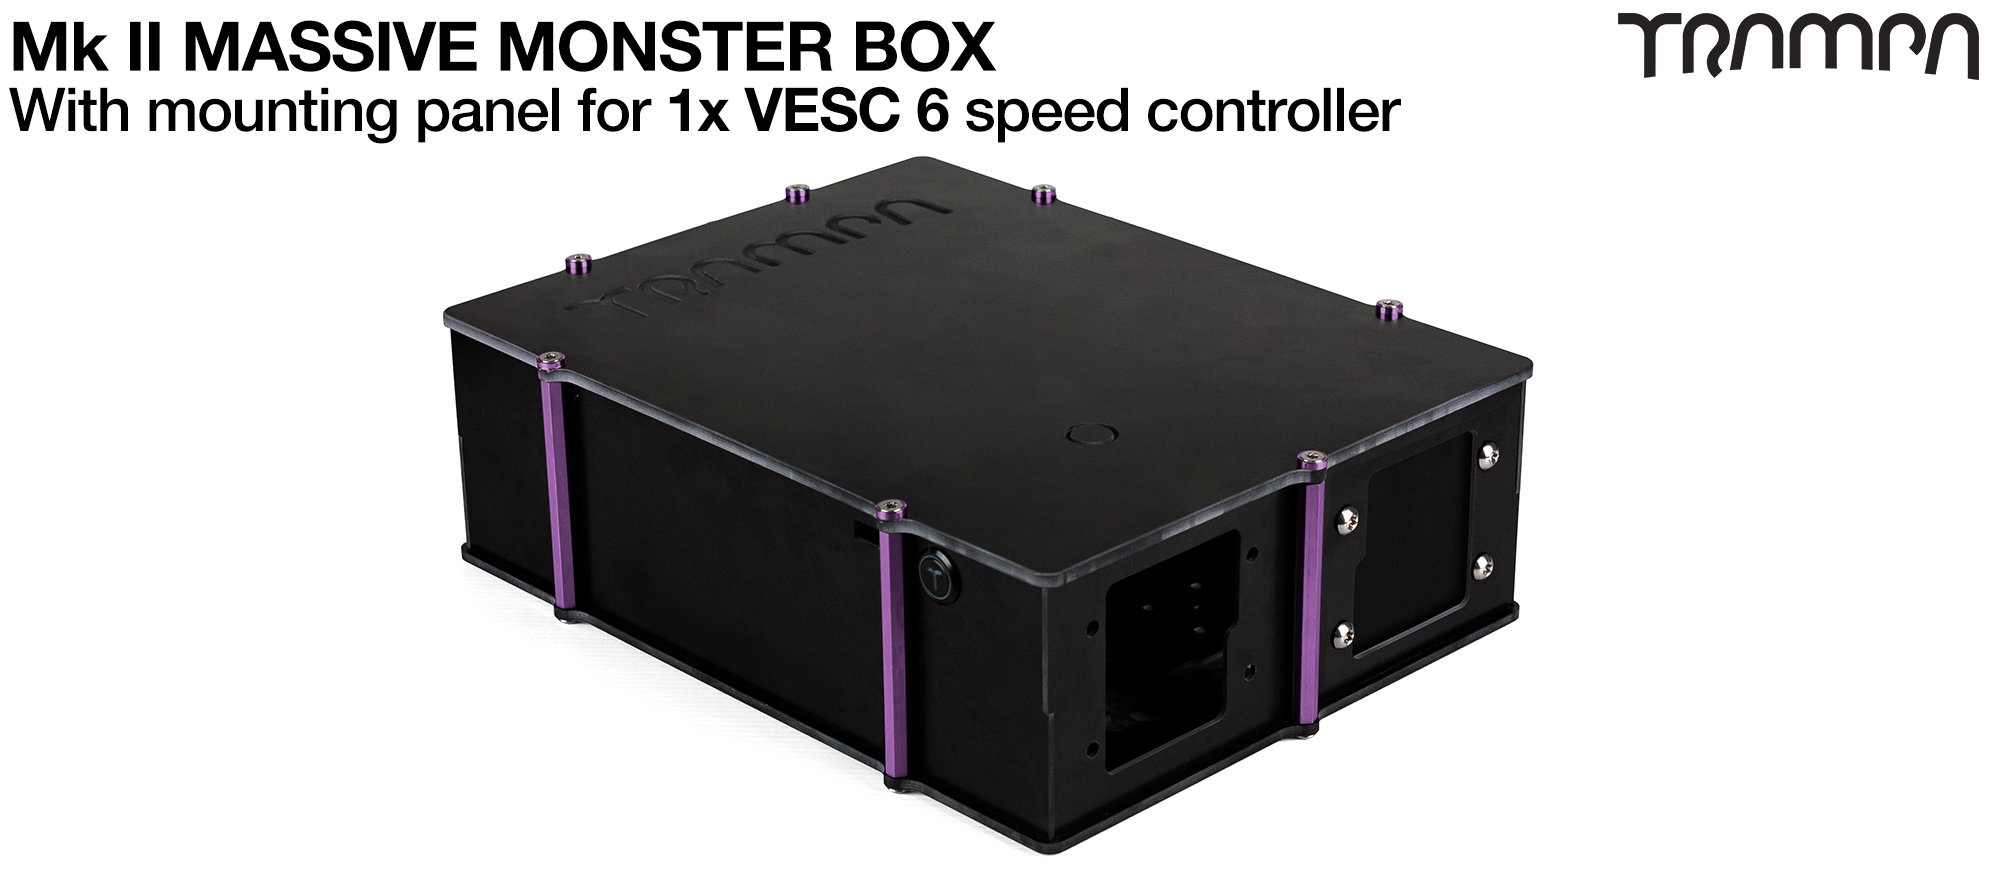 1WD MASSIVE Monster Box - 1x VESC 6 Mounting Panel  (£175)